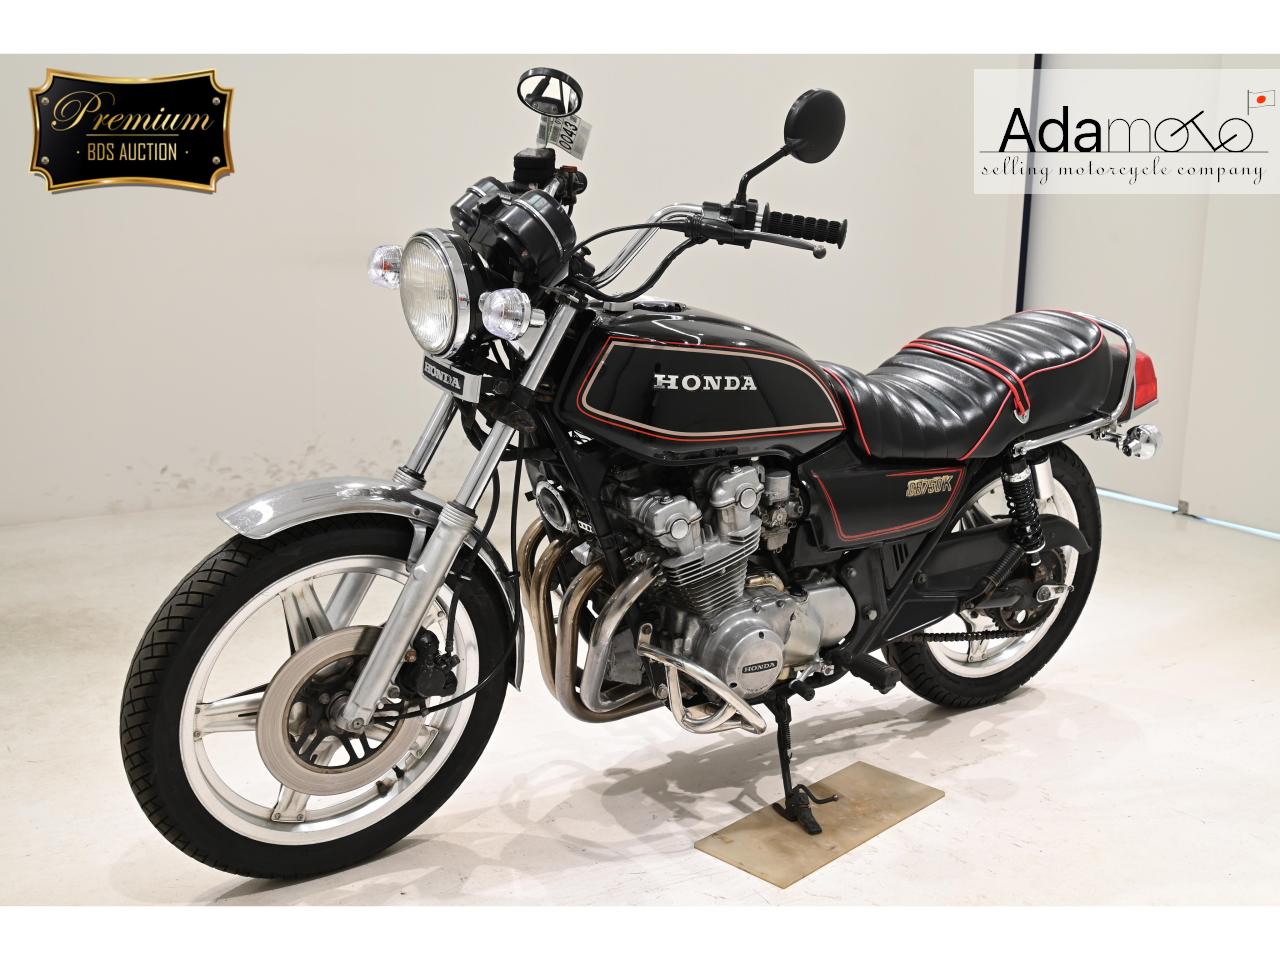 Honda CB750K - Adamoto - Motorcycles from Japan